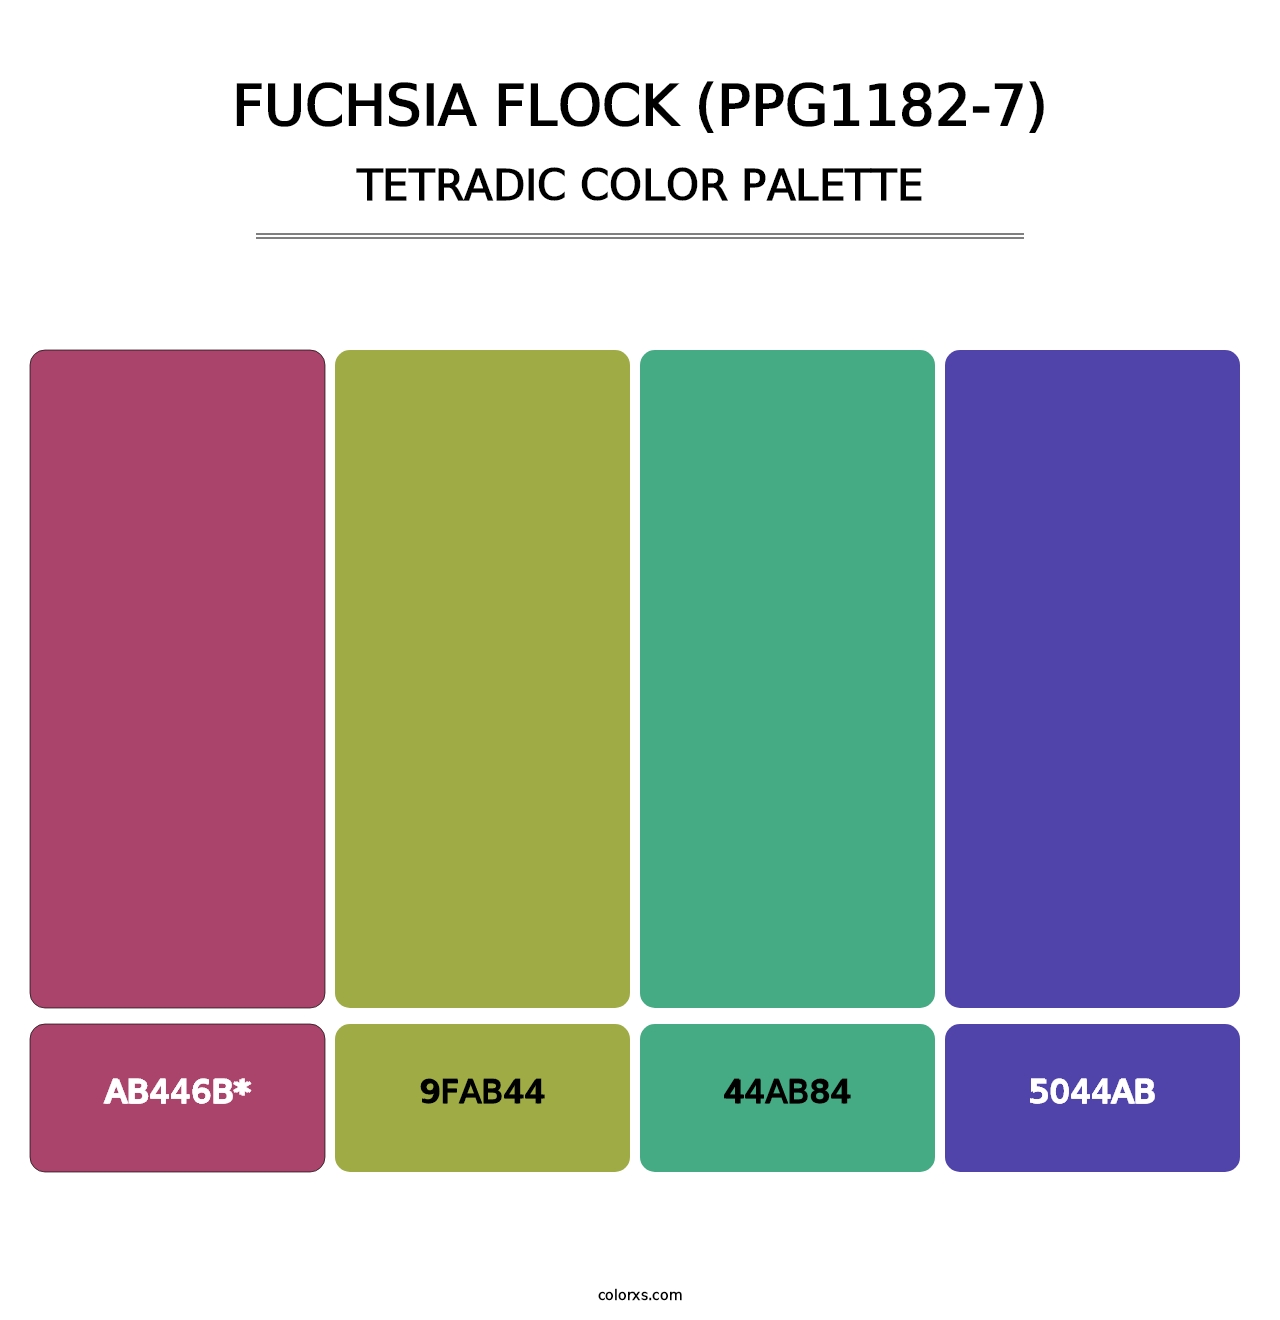 Fuchsia Flock (PPG1182-7) - Tetradic Color Palette